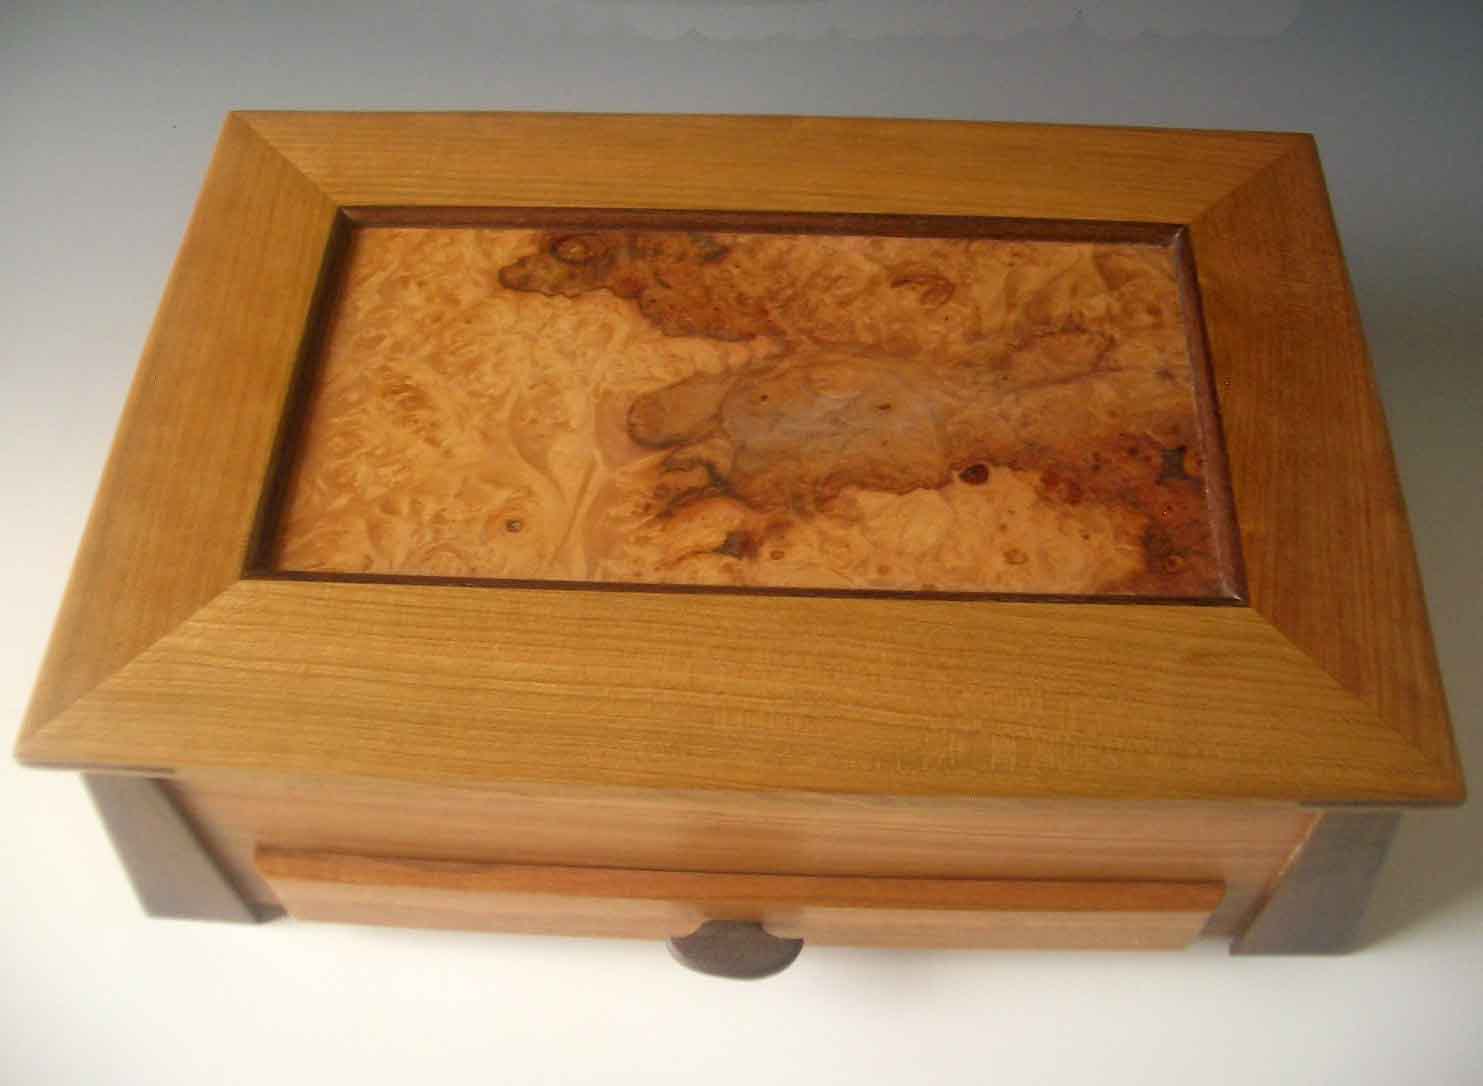 Wood Box With Lid Wood Box Cherry Wood Box Box With Lid Wooden Box With Lid Decorative Box With Lid Wooden Box